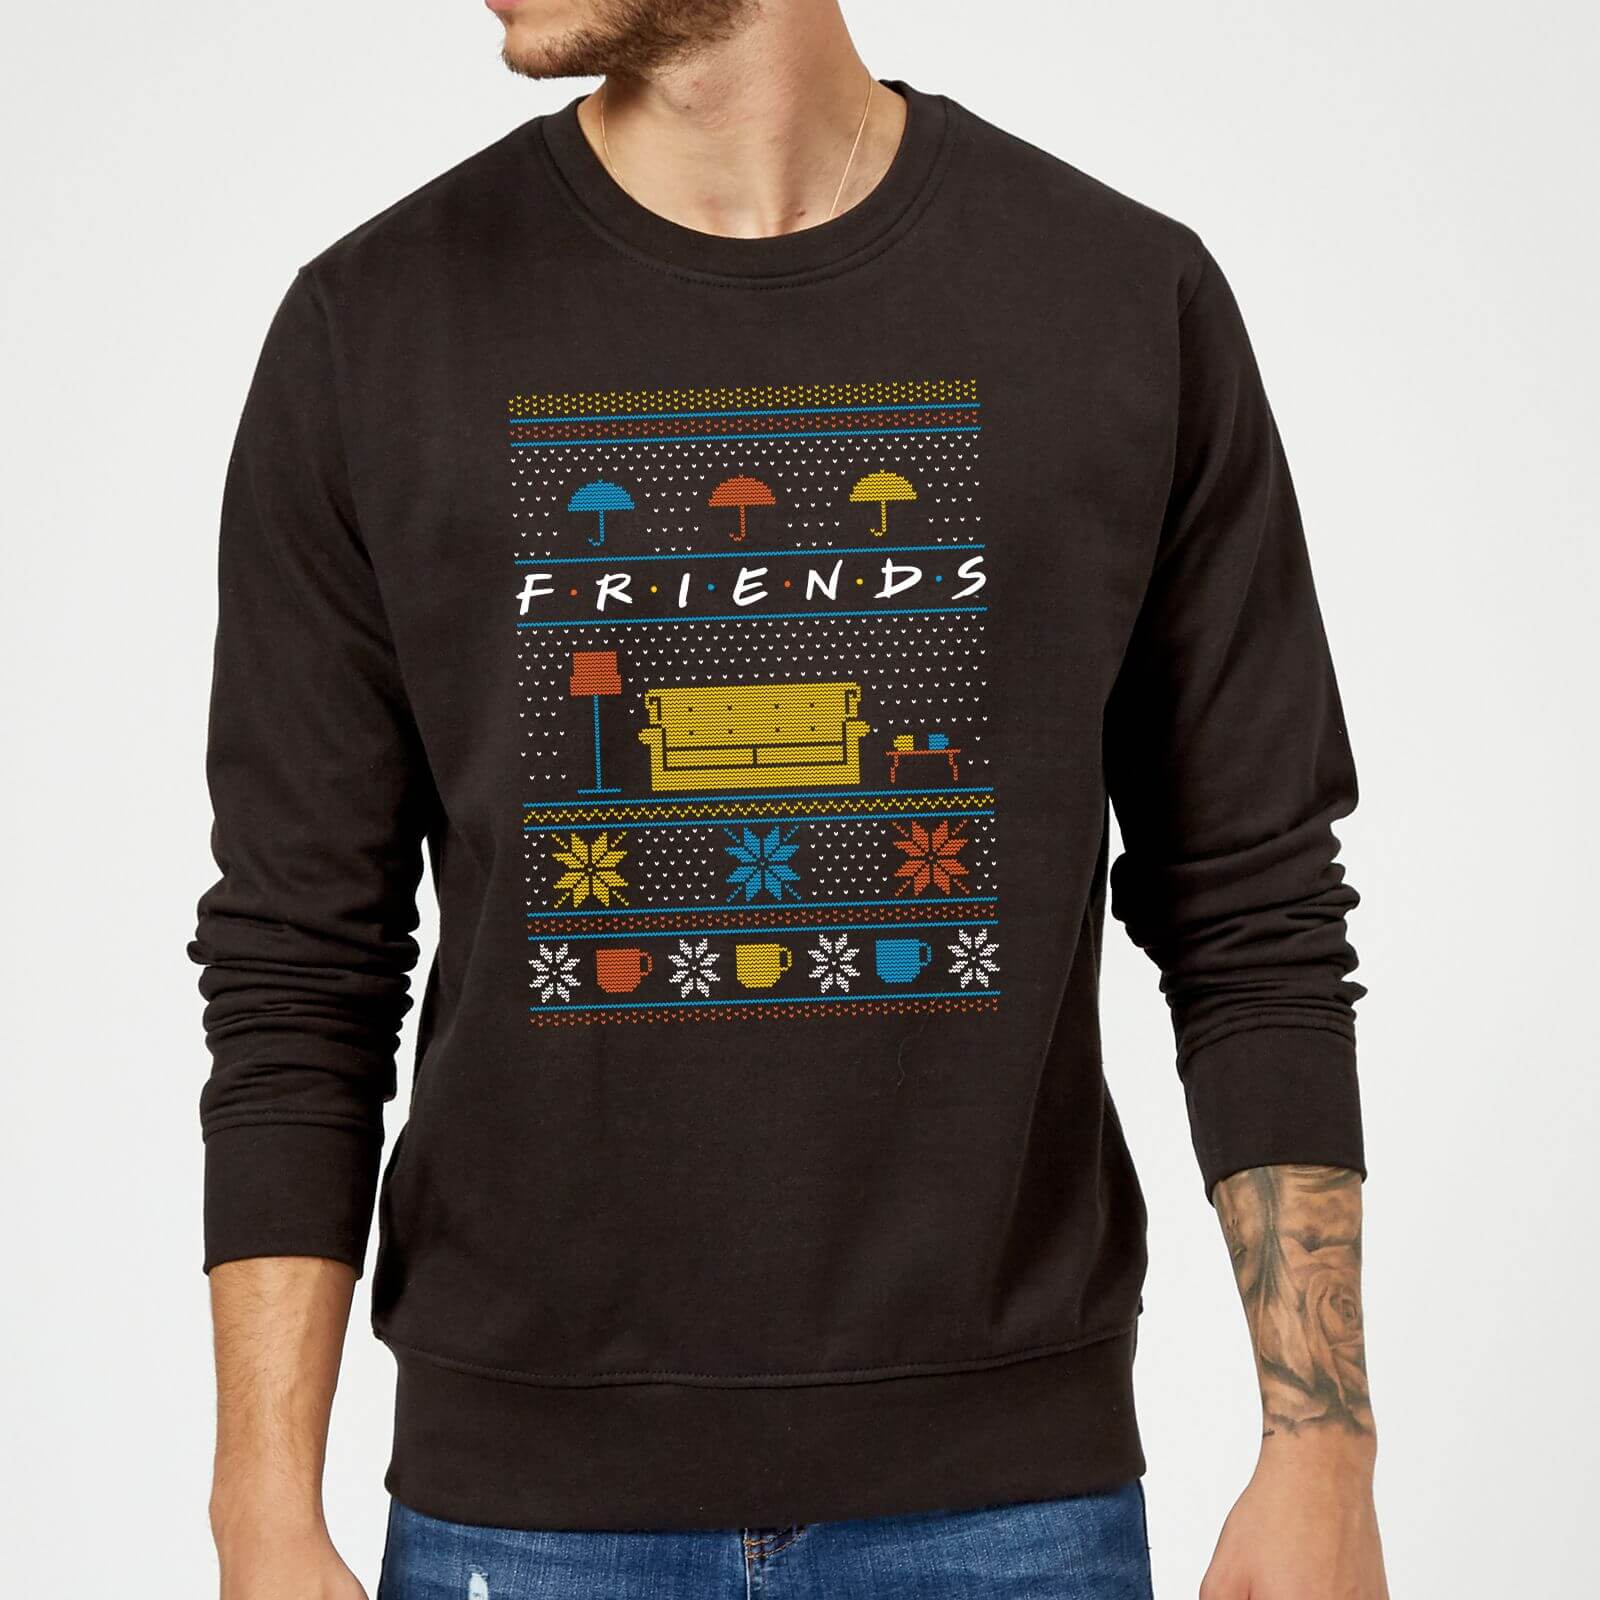 Friends sofa knit christmas jumper - black - xl